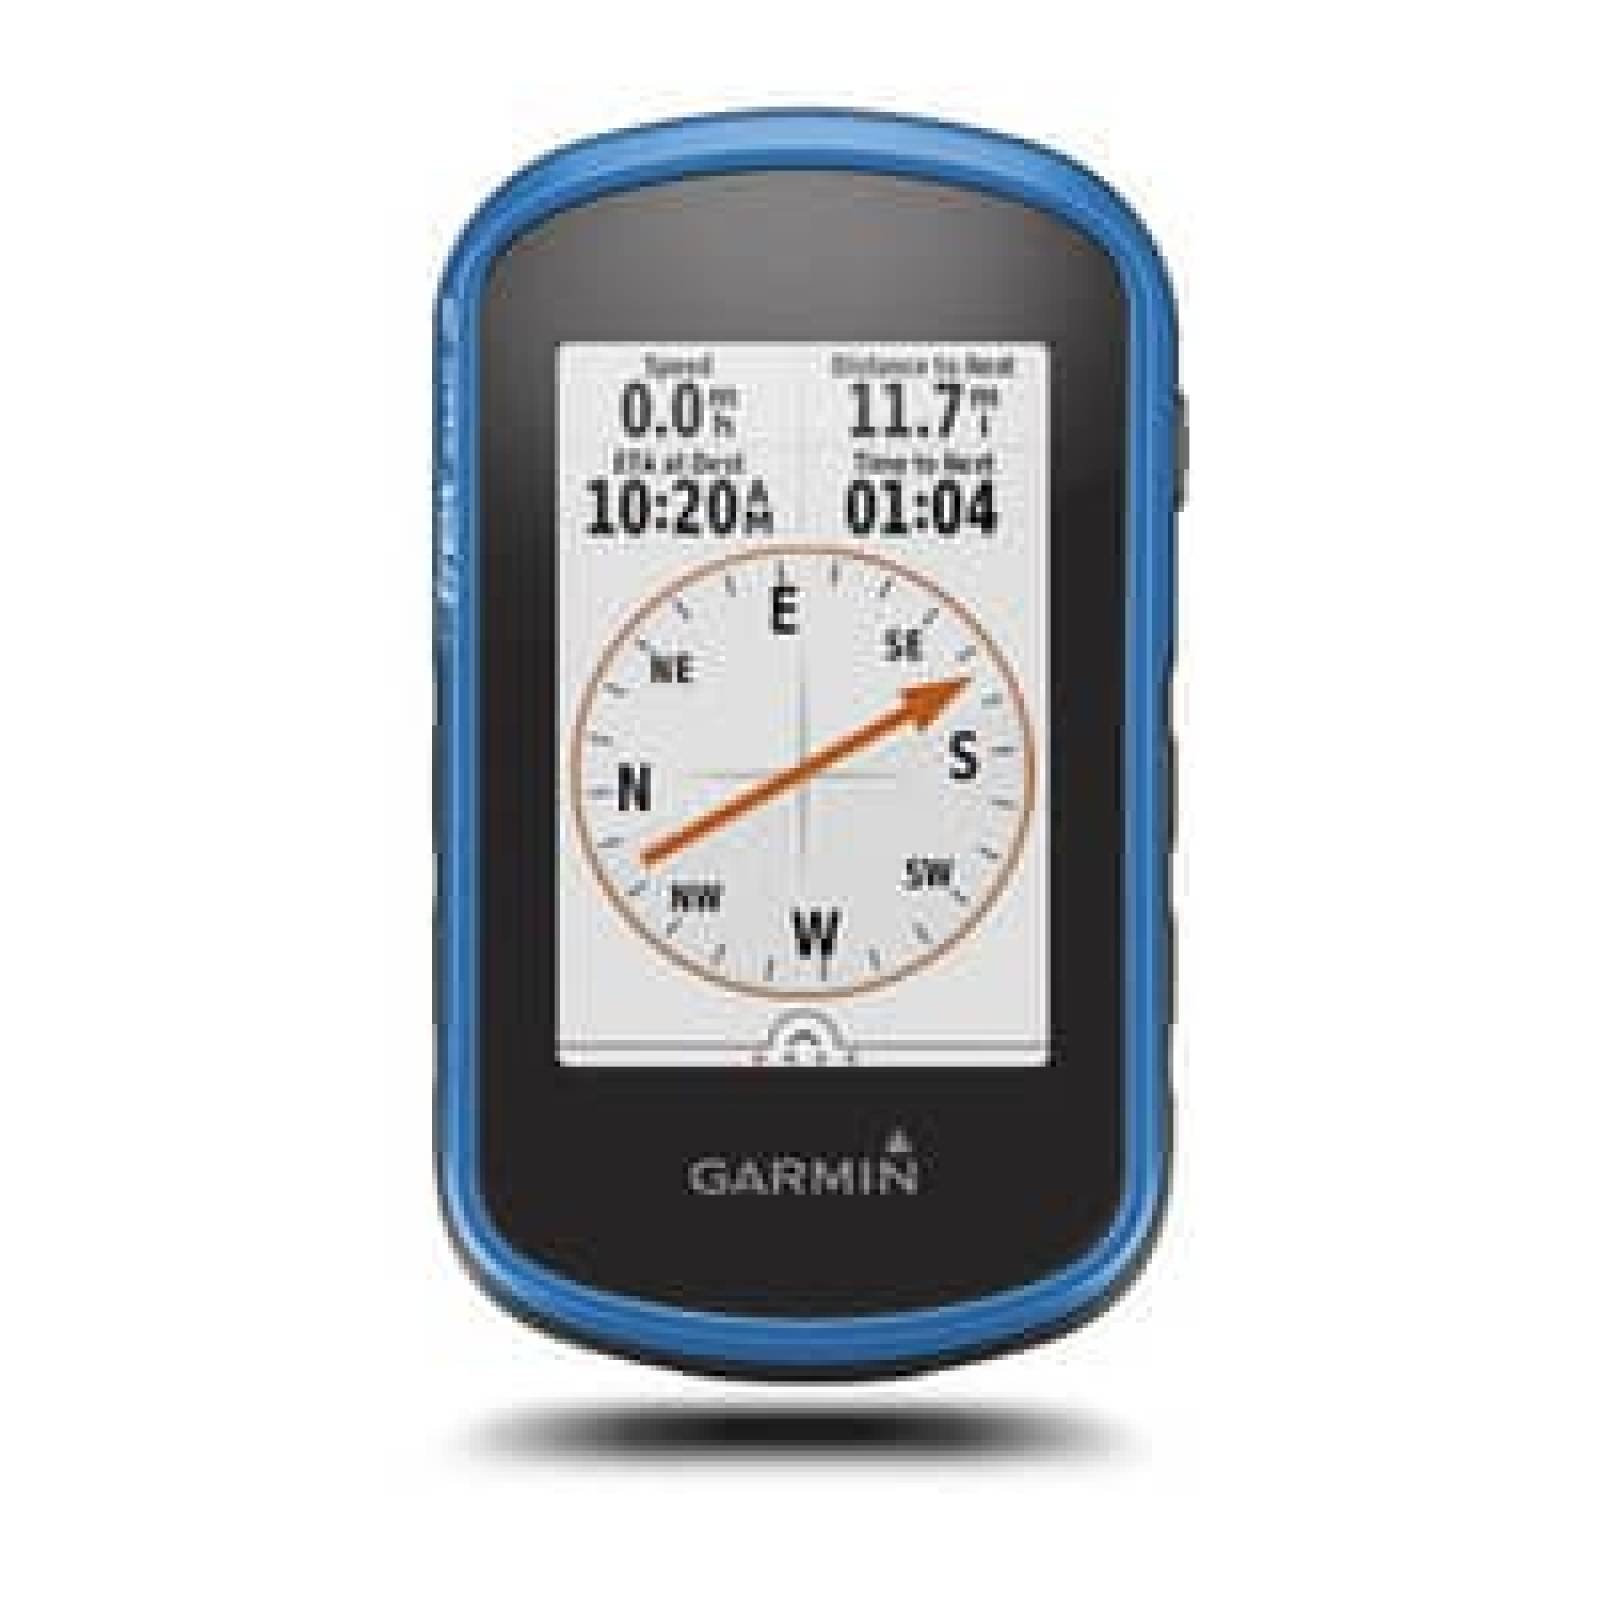 GPS Garmin eTrex 25